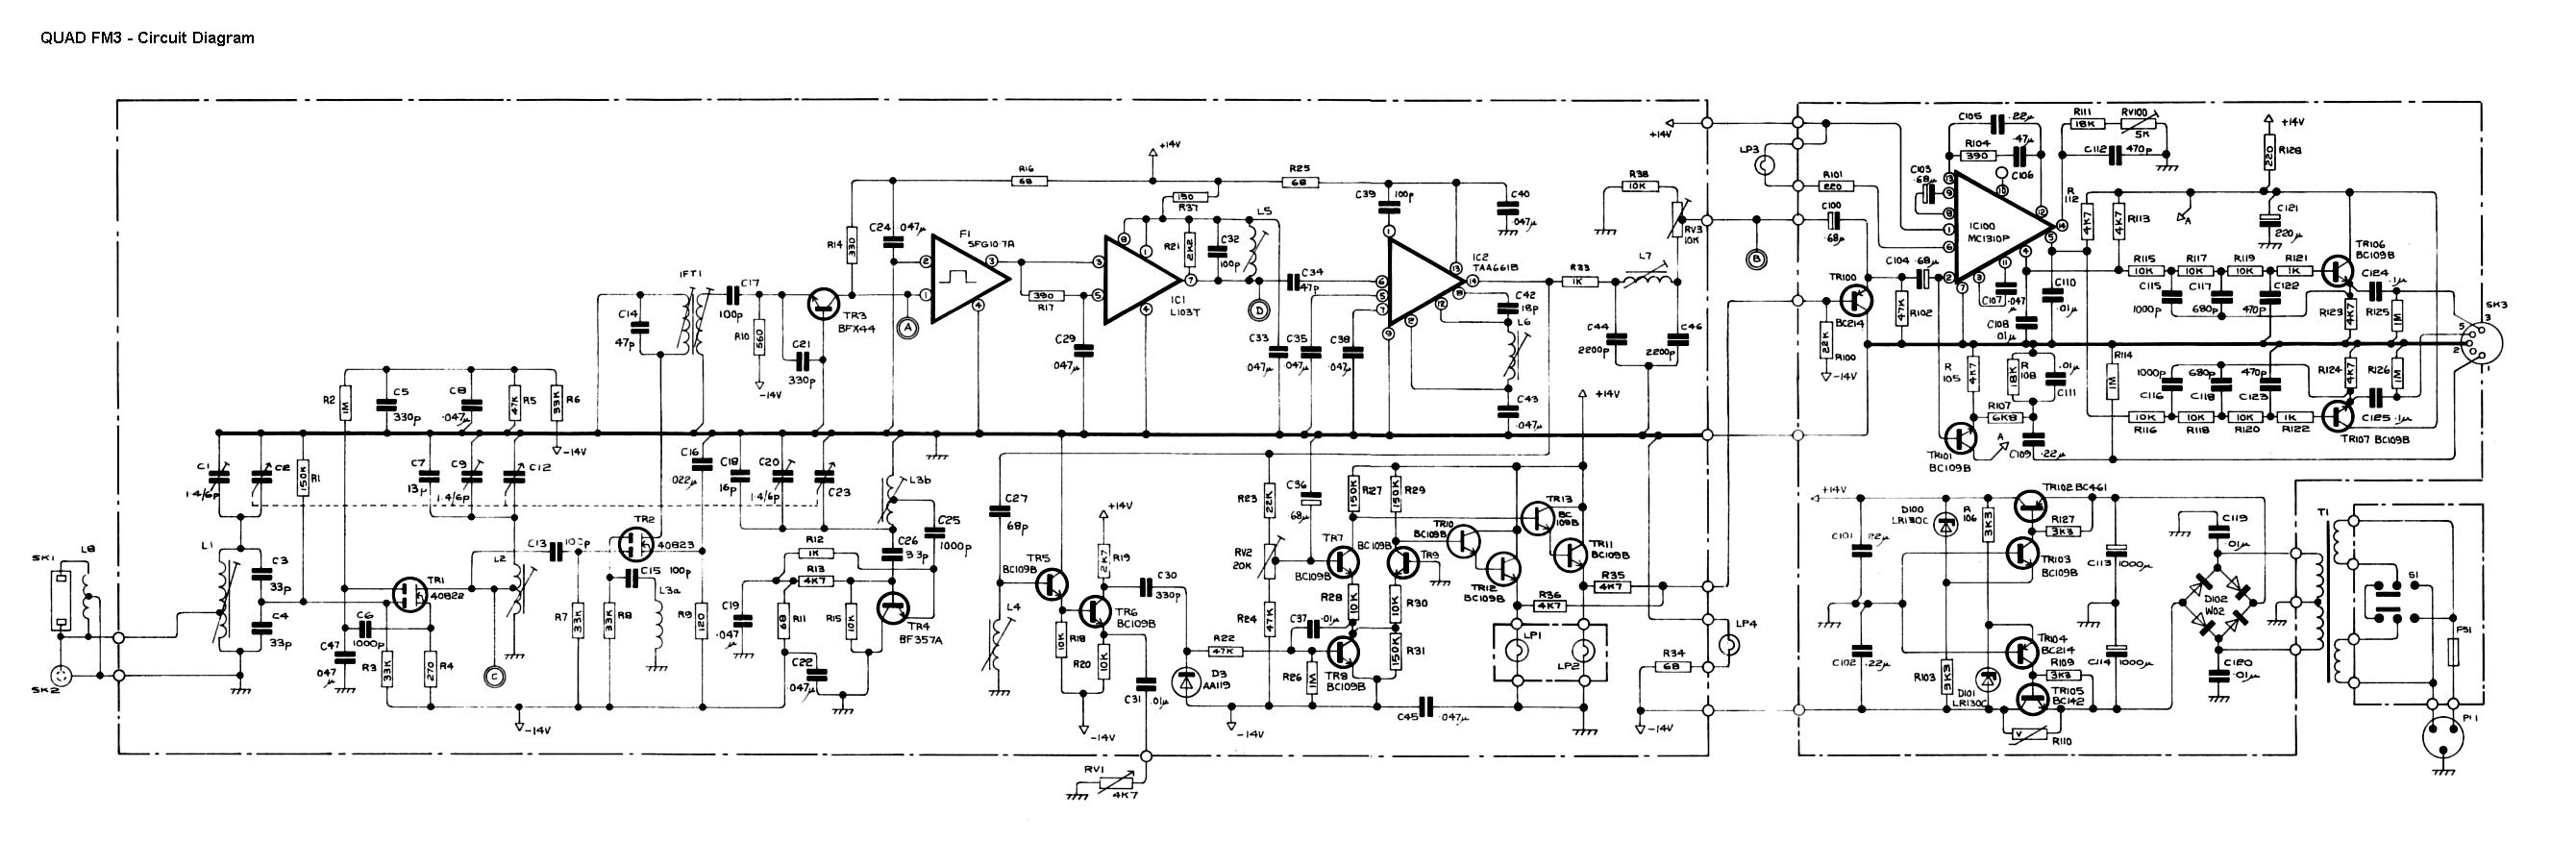 Dia Circuit Diagram - Diagram Media